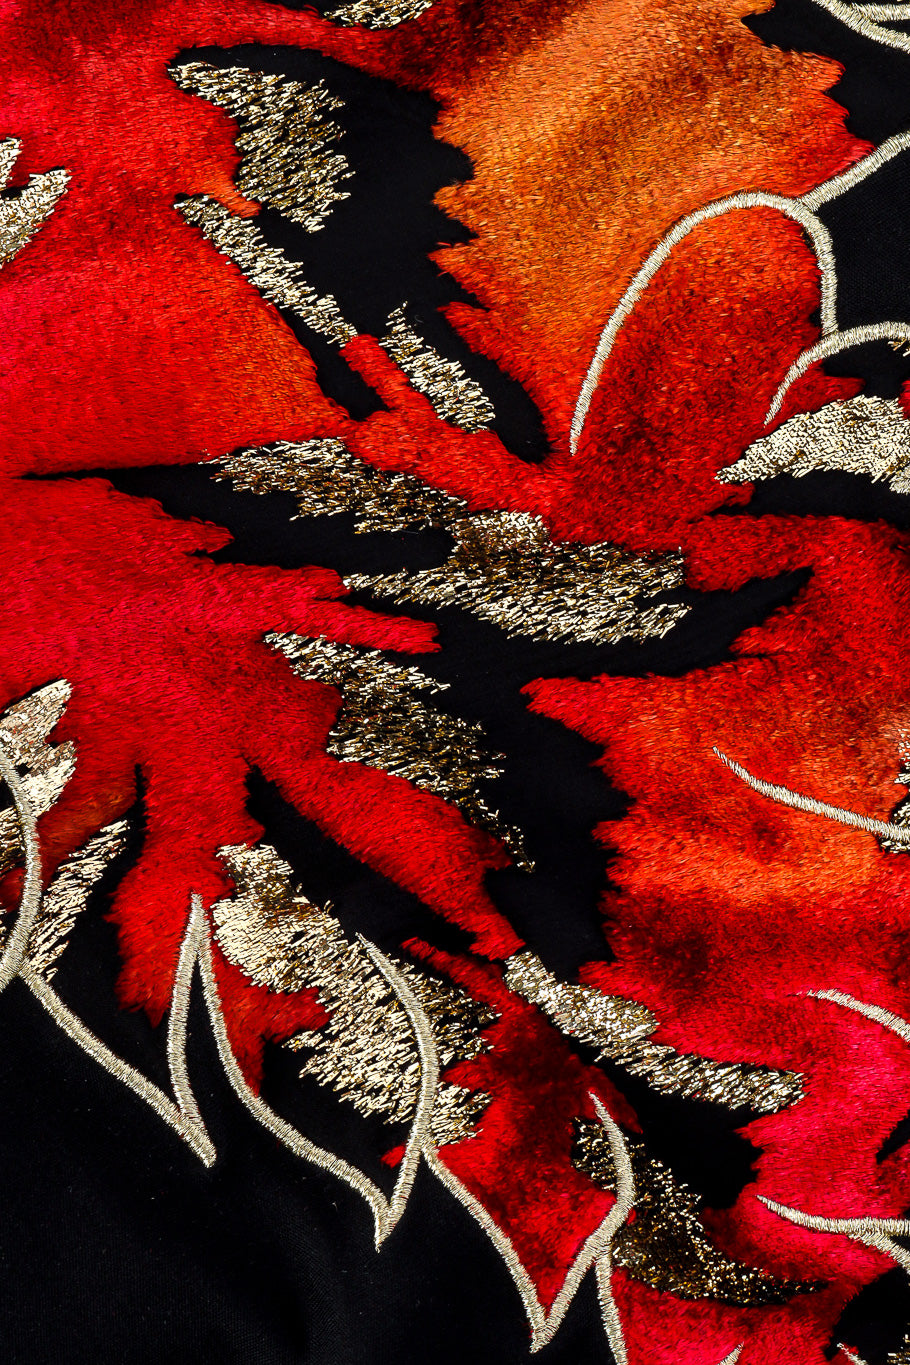 Multi-printed silk limited edition dress by Diane Freis closeup fabric details @recessla